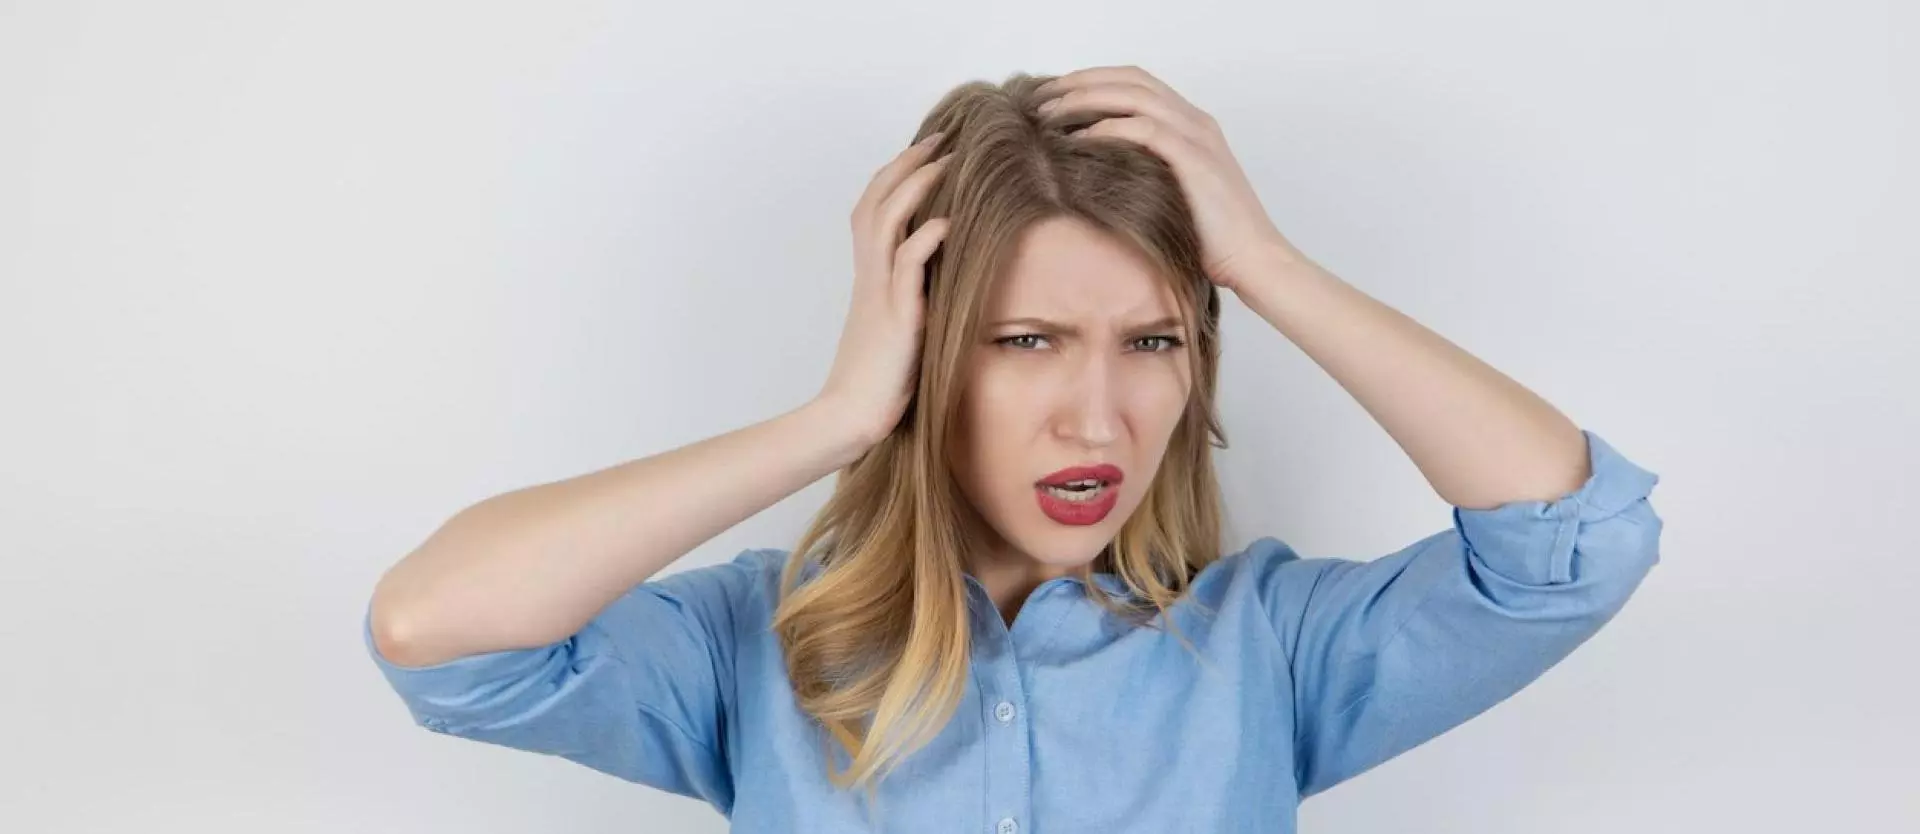 Does Having an Oily Scalp Cause Hair Loss?